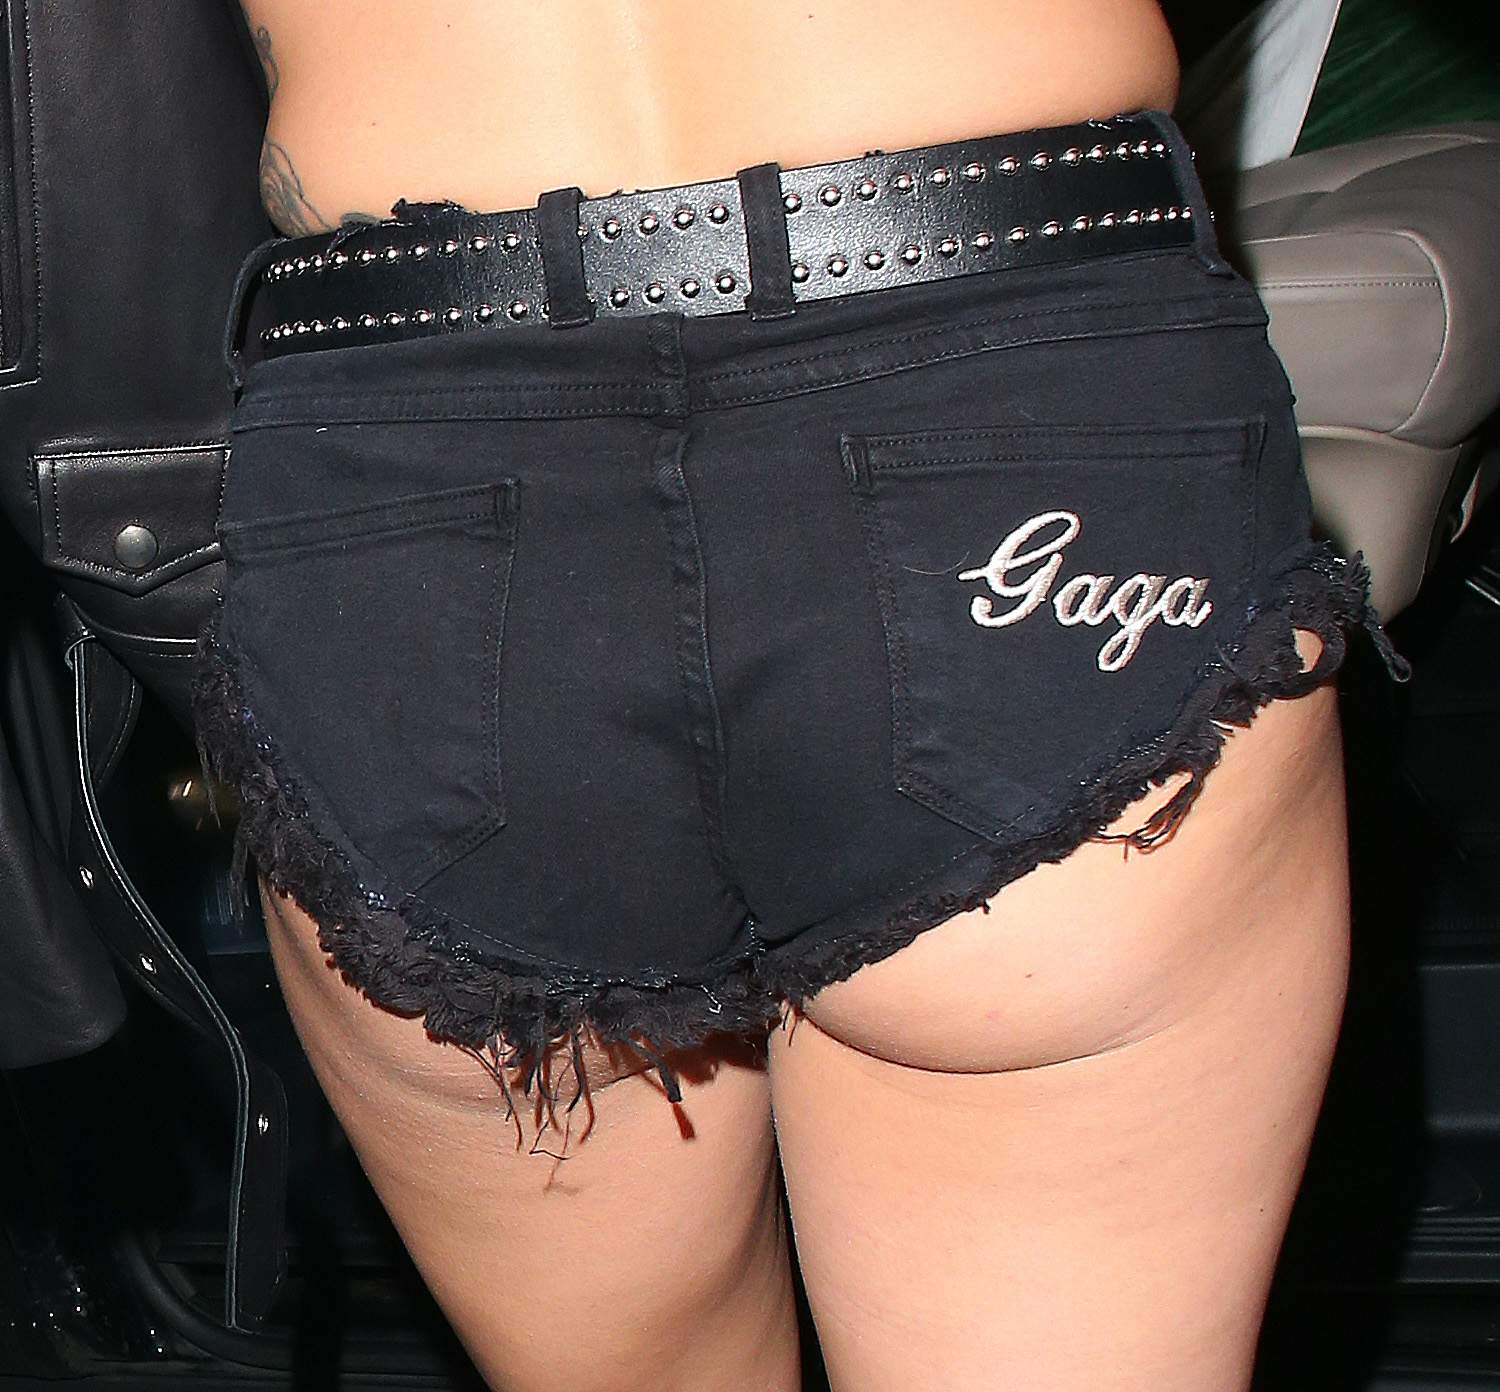 Underboob Photos of Lady Gaga